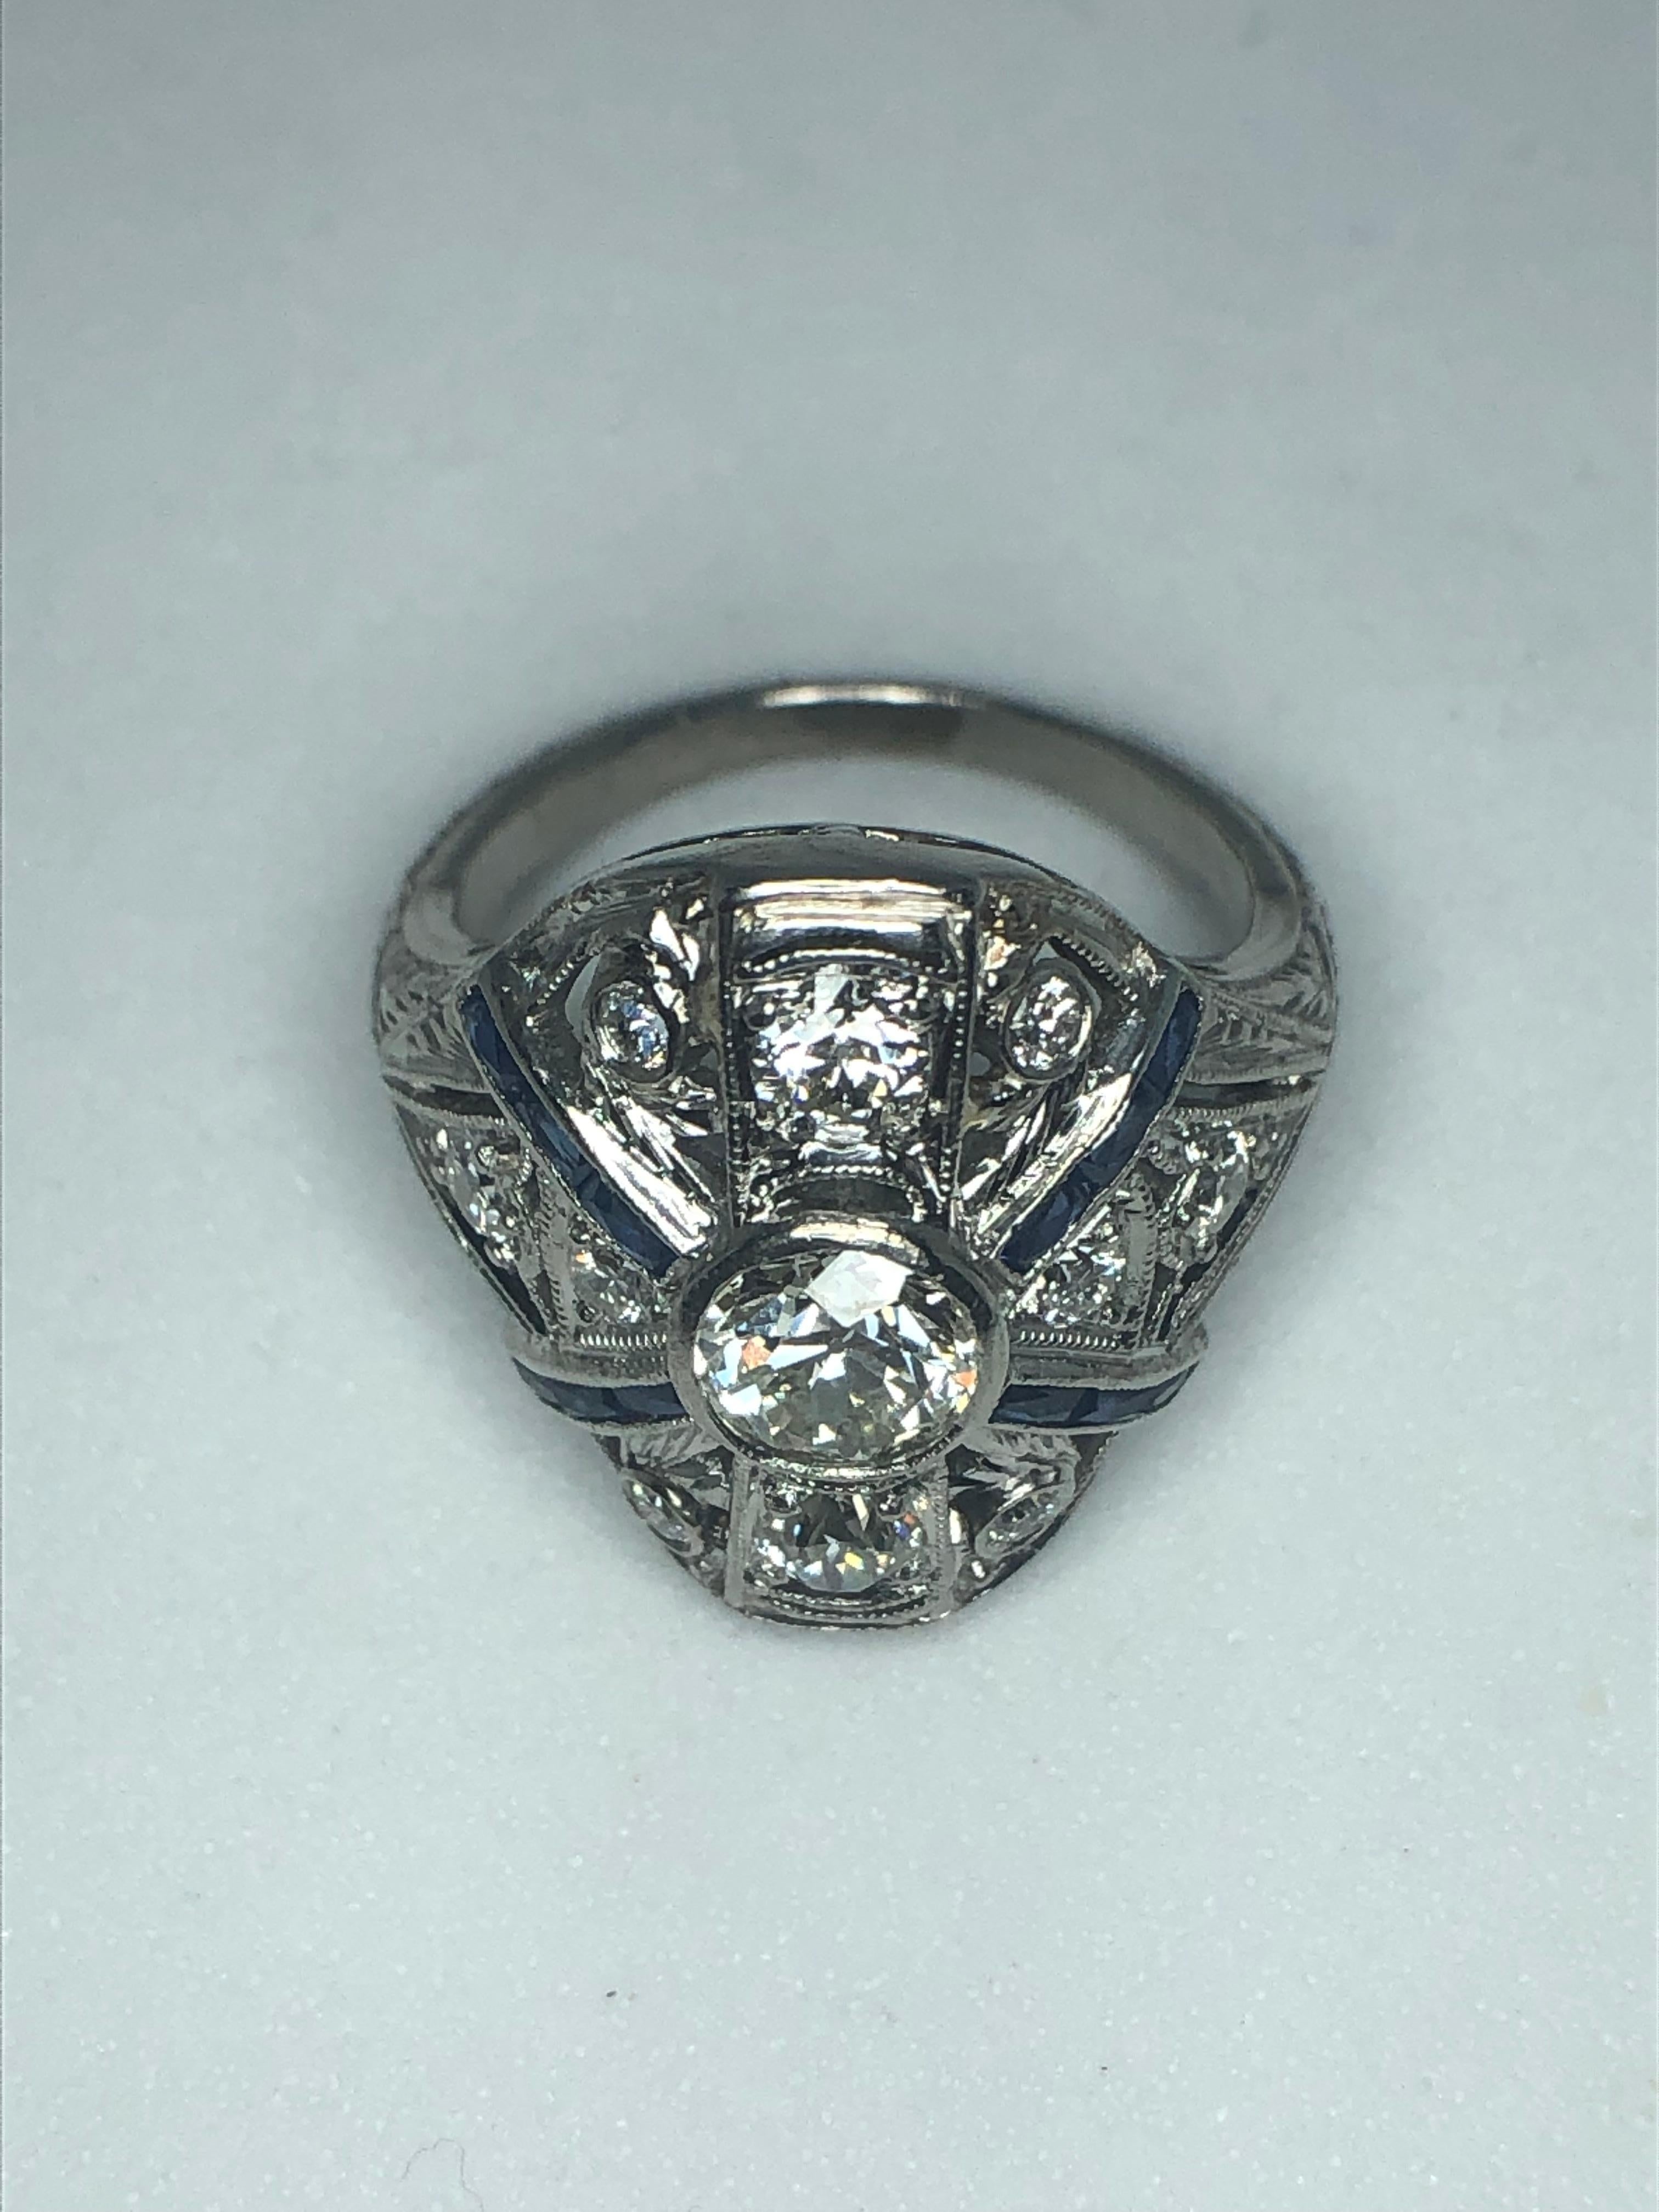 Lady's platinum diamond and sapphire estate ring from the Edwardian to Art Deco era, diamonds = 1.14ct, 1 - European cut round diamond = .64ct color J-L, clarity VVS2-VS1, 10 - European cut round diamonds = .5ct total weight, color G-I, clarity VS2,